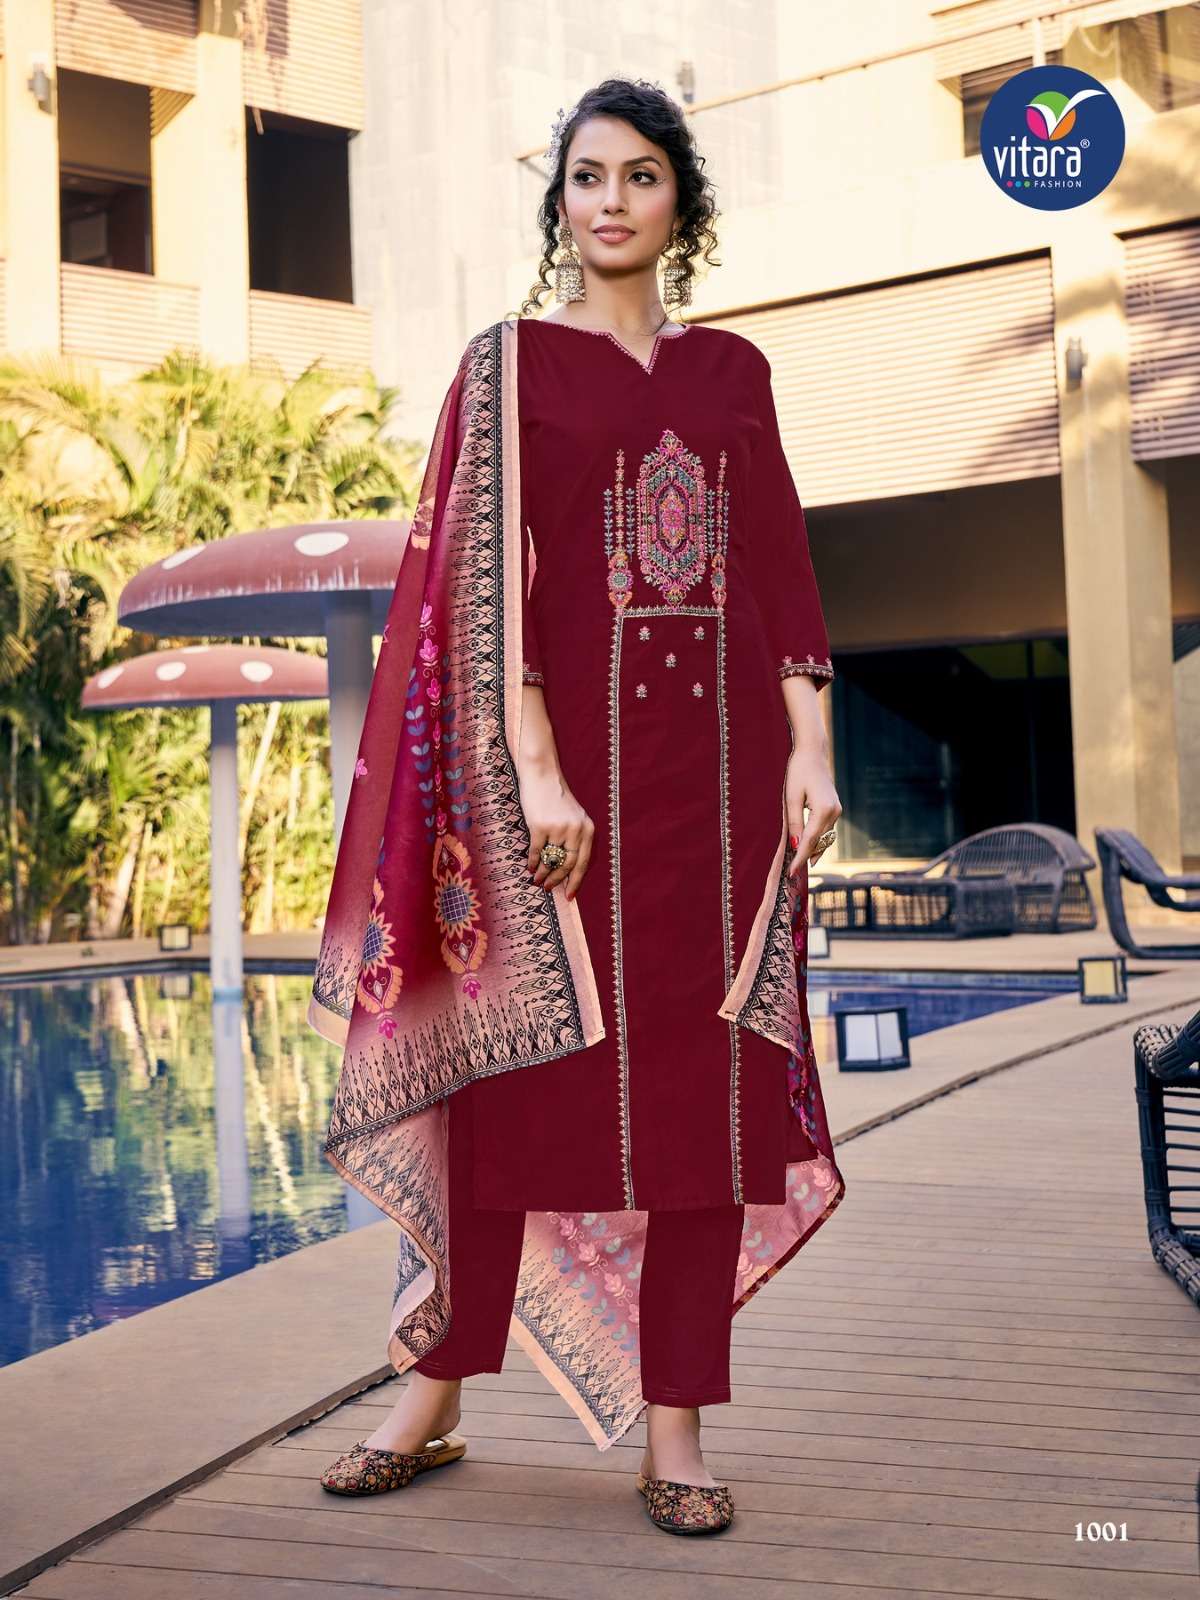 vitara fashion royal ford 1001-1004 series viscose fabrics designer latest kurtis online dealer surat 